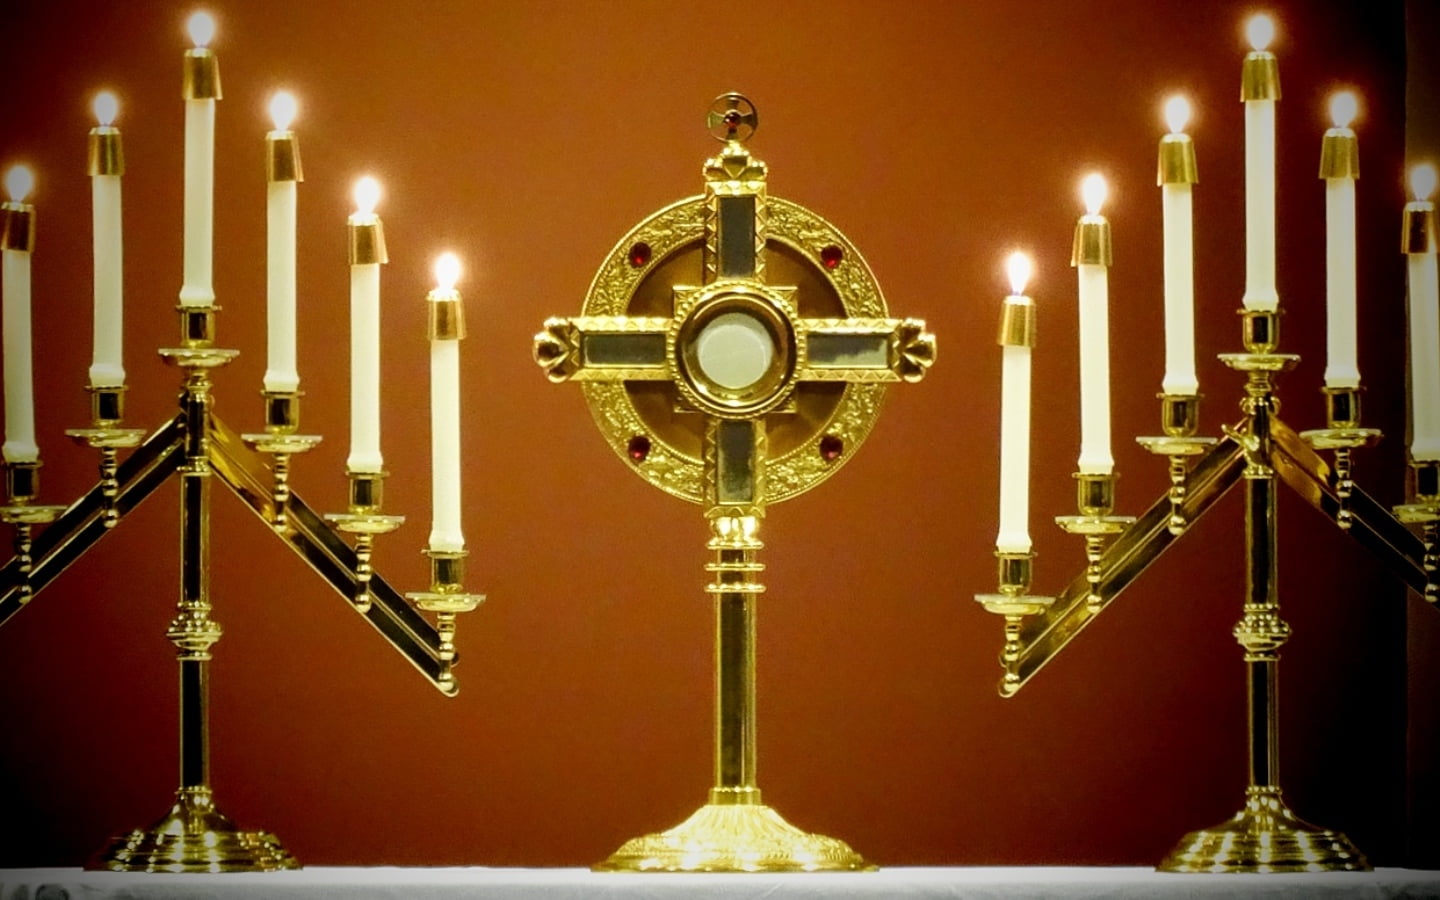 The Most Holy Sacrament, candles, adoration, Jesus, illuminated